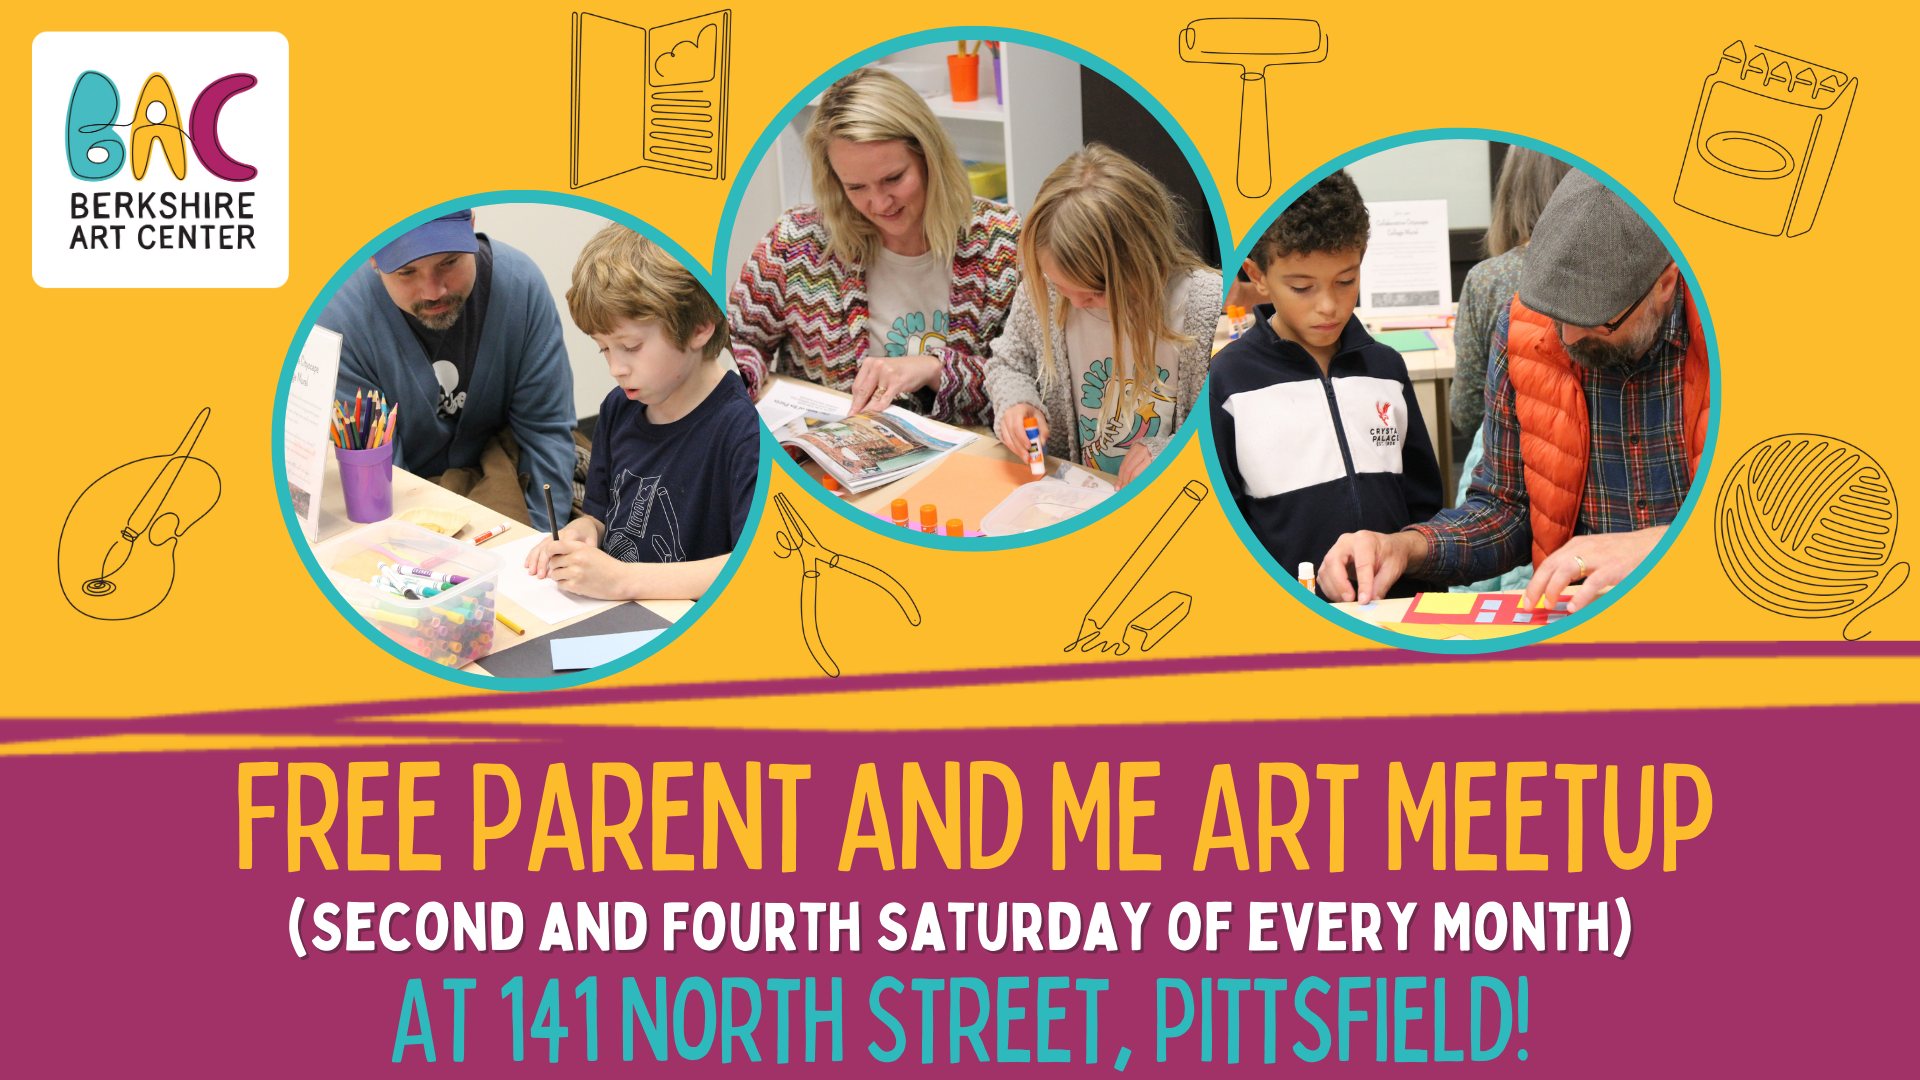 Free Parent and Me Art Meetup at Berkshire Art Center!